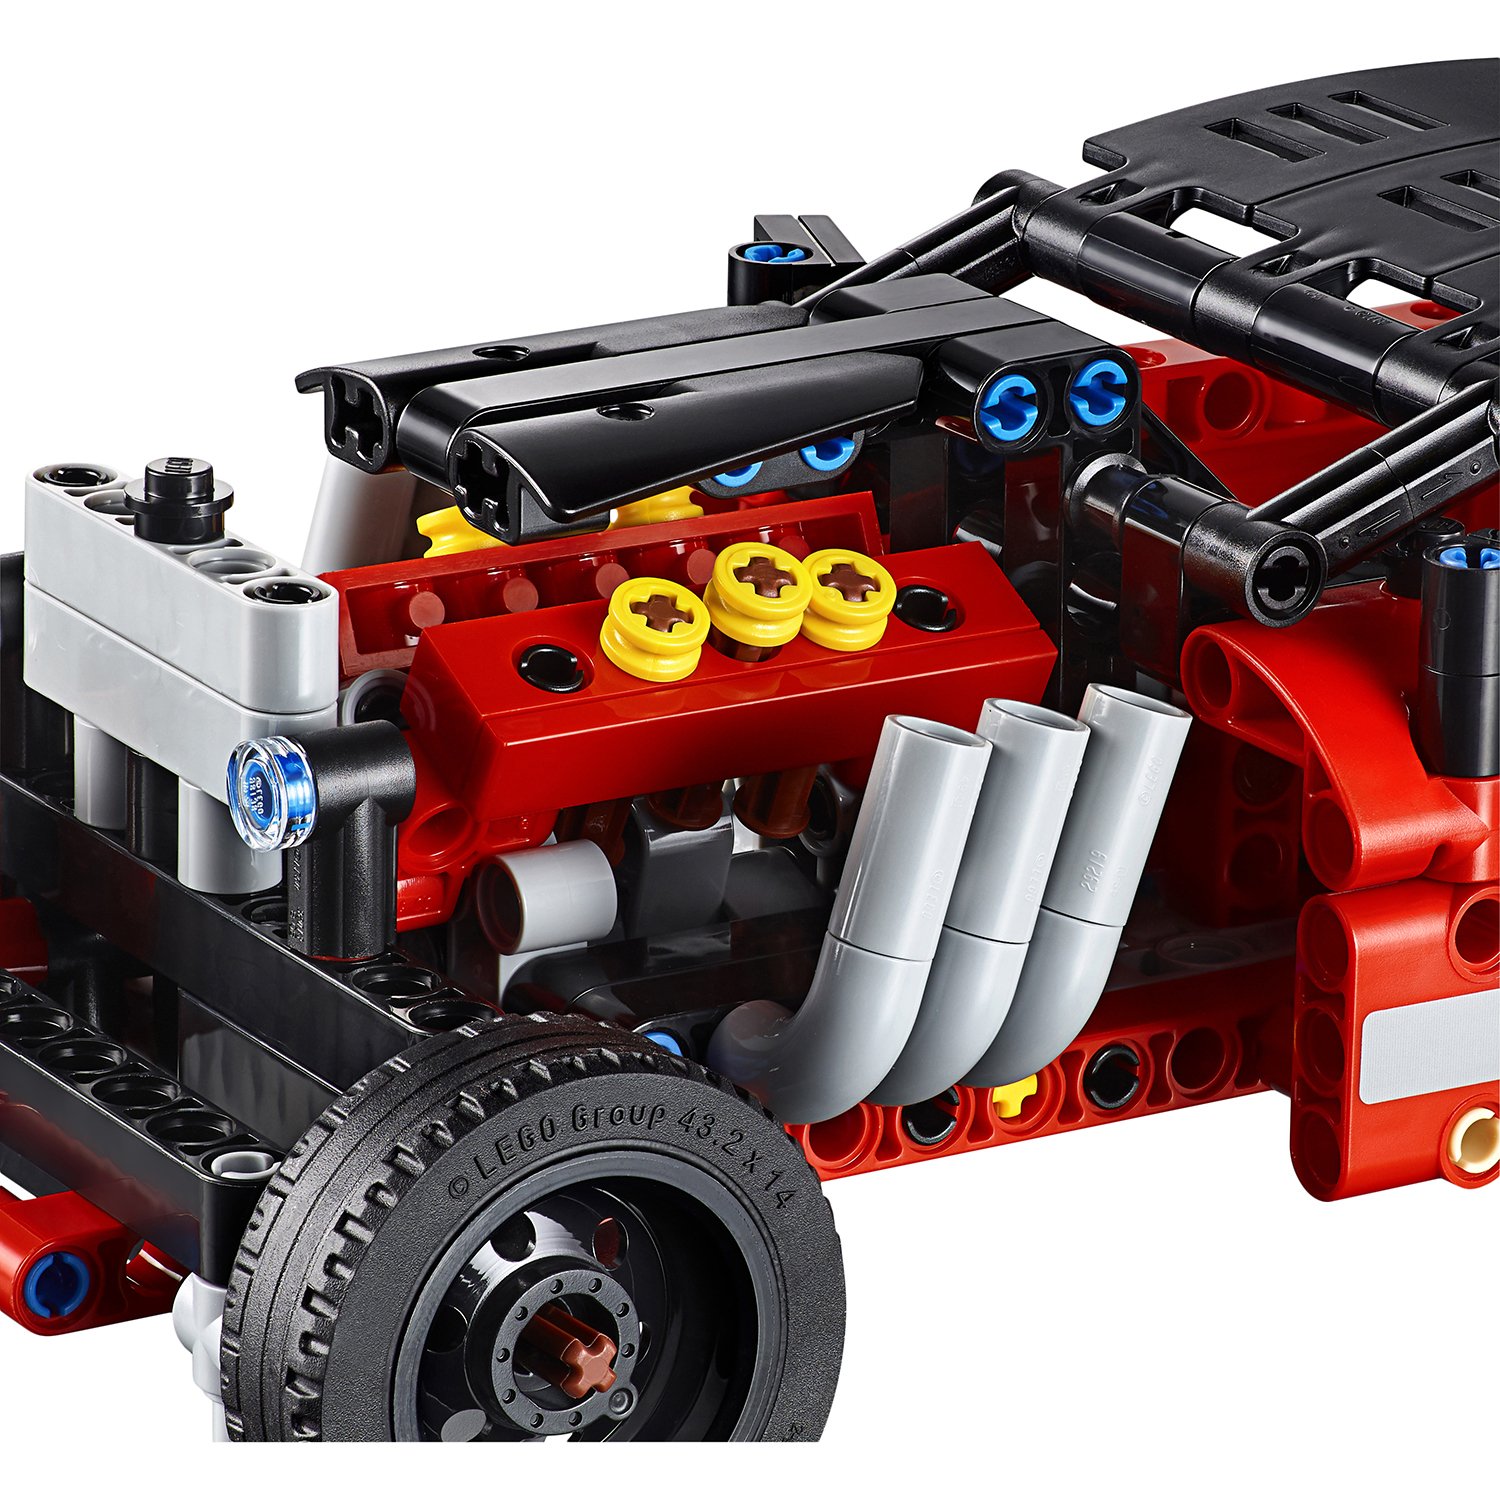 Lego Technic 42098 Автовоз